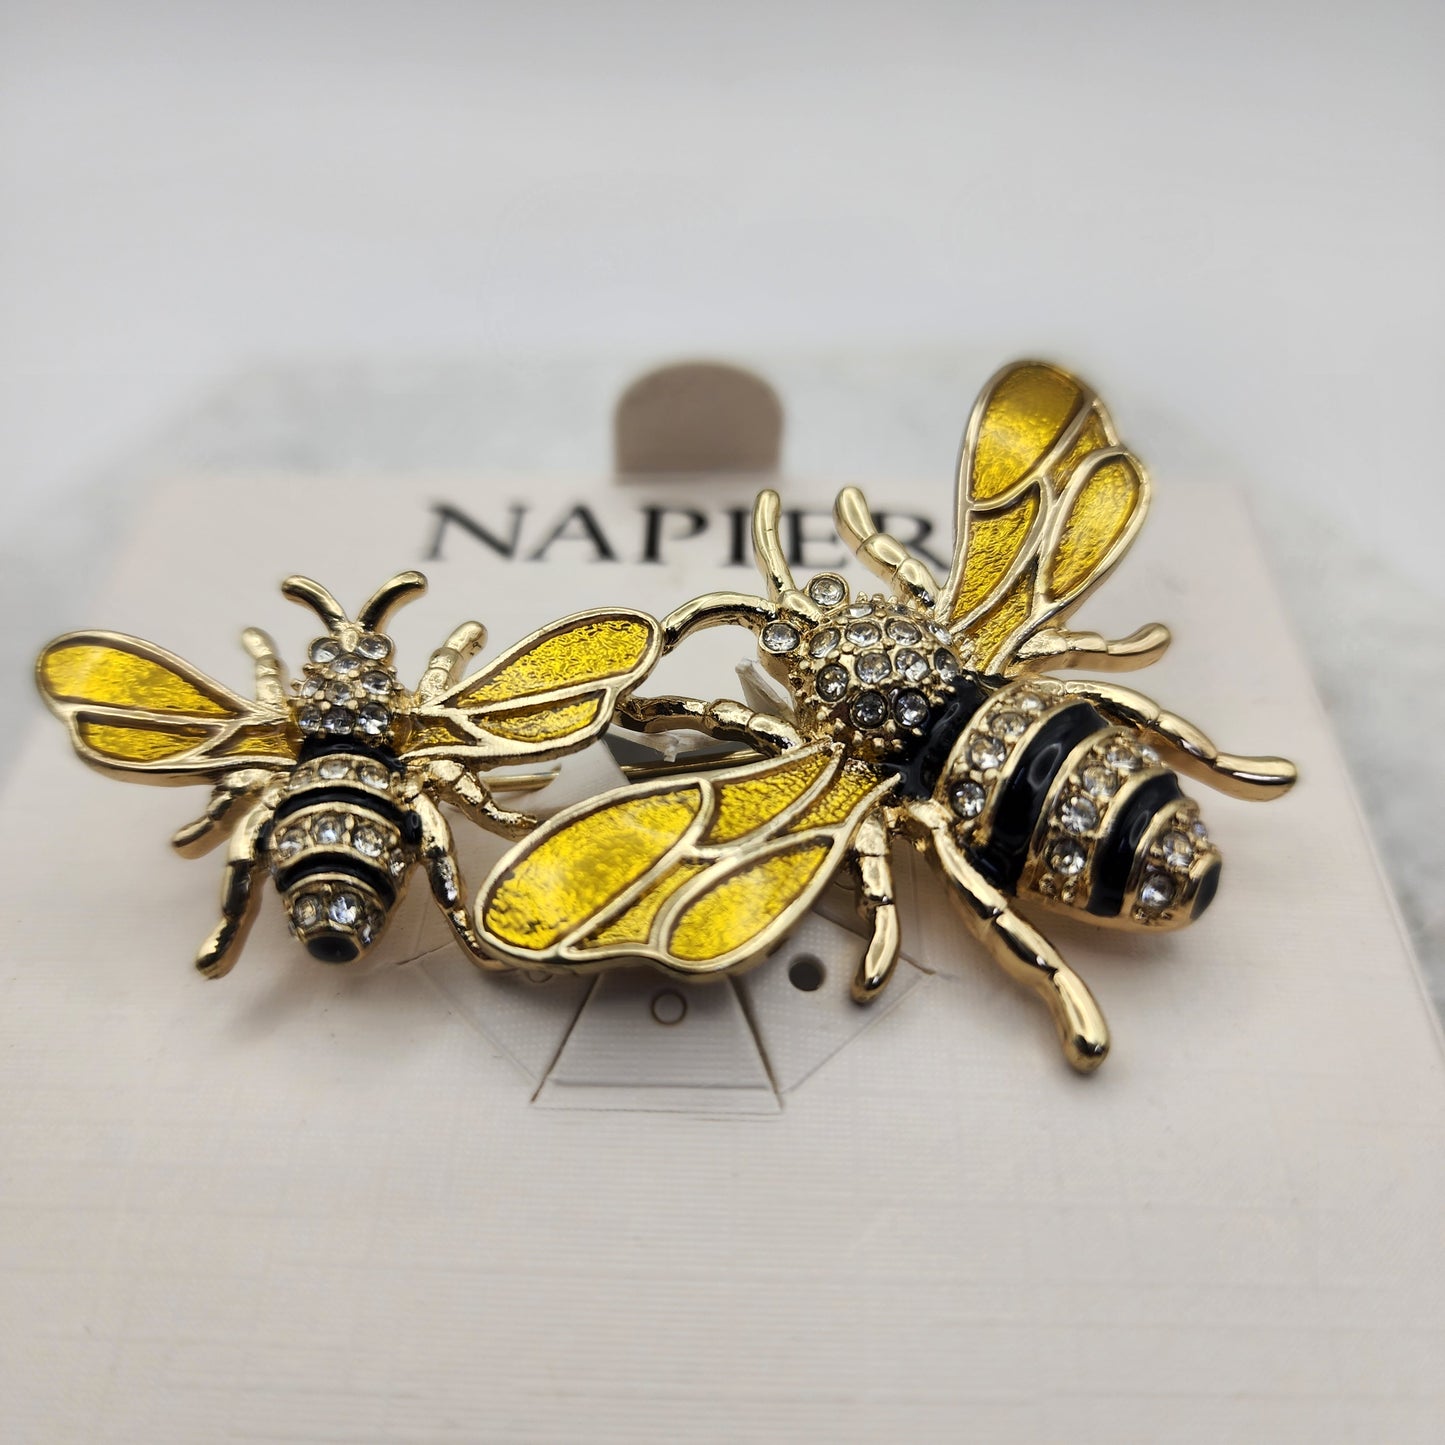 Napier Rhinestone Bees Brooch